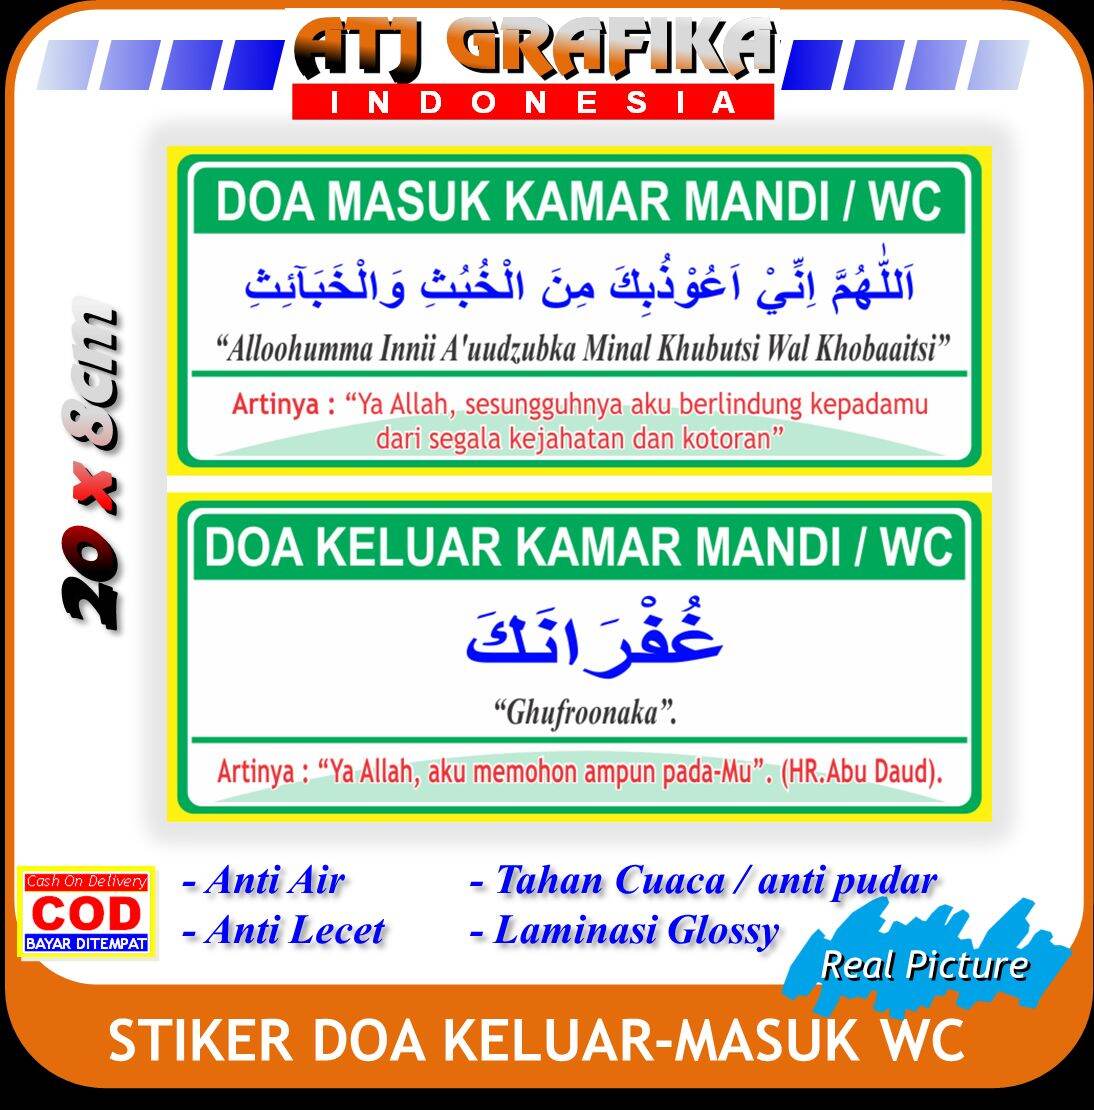 Stiker New Doa Keluar Masuk Kamar Mandi Toilet Wc Sticker Ibadah Keluarga Islam Lazada Indonesia